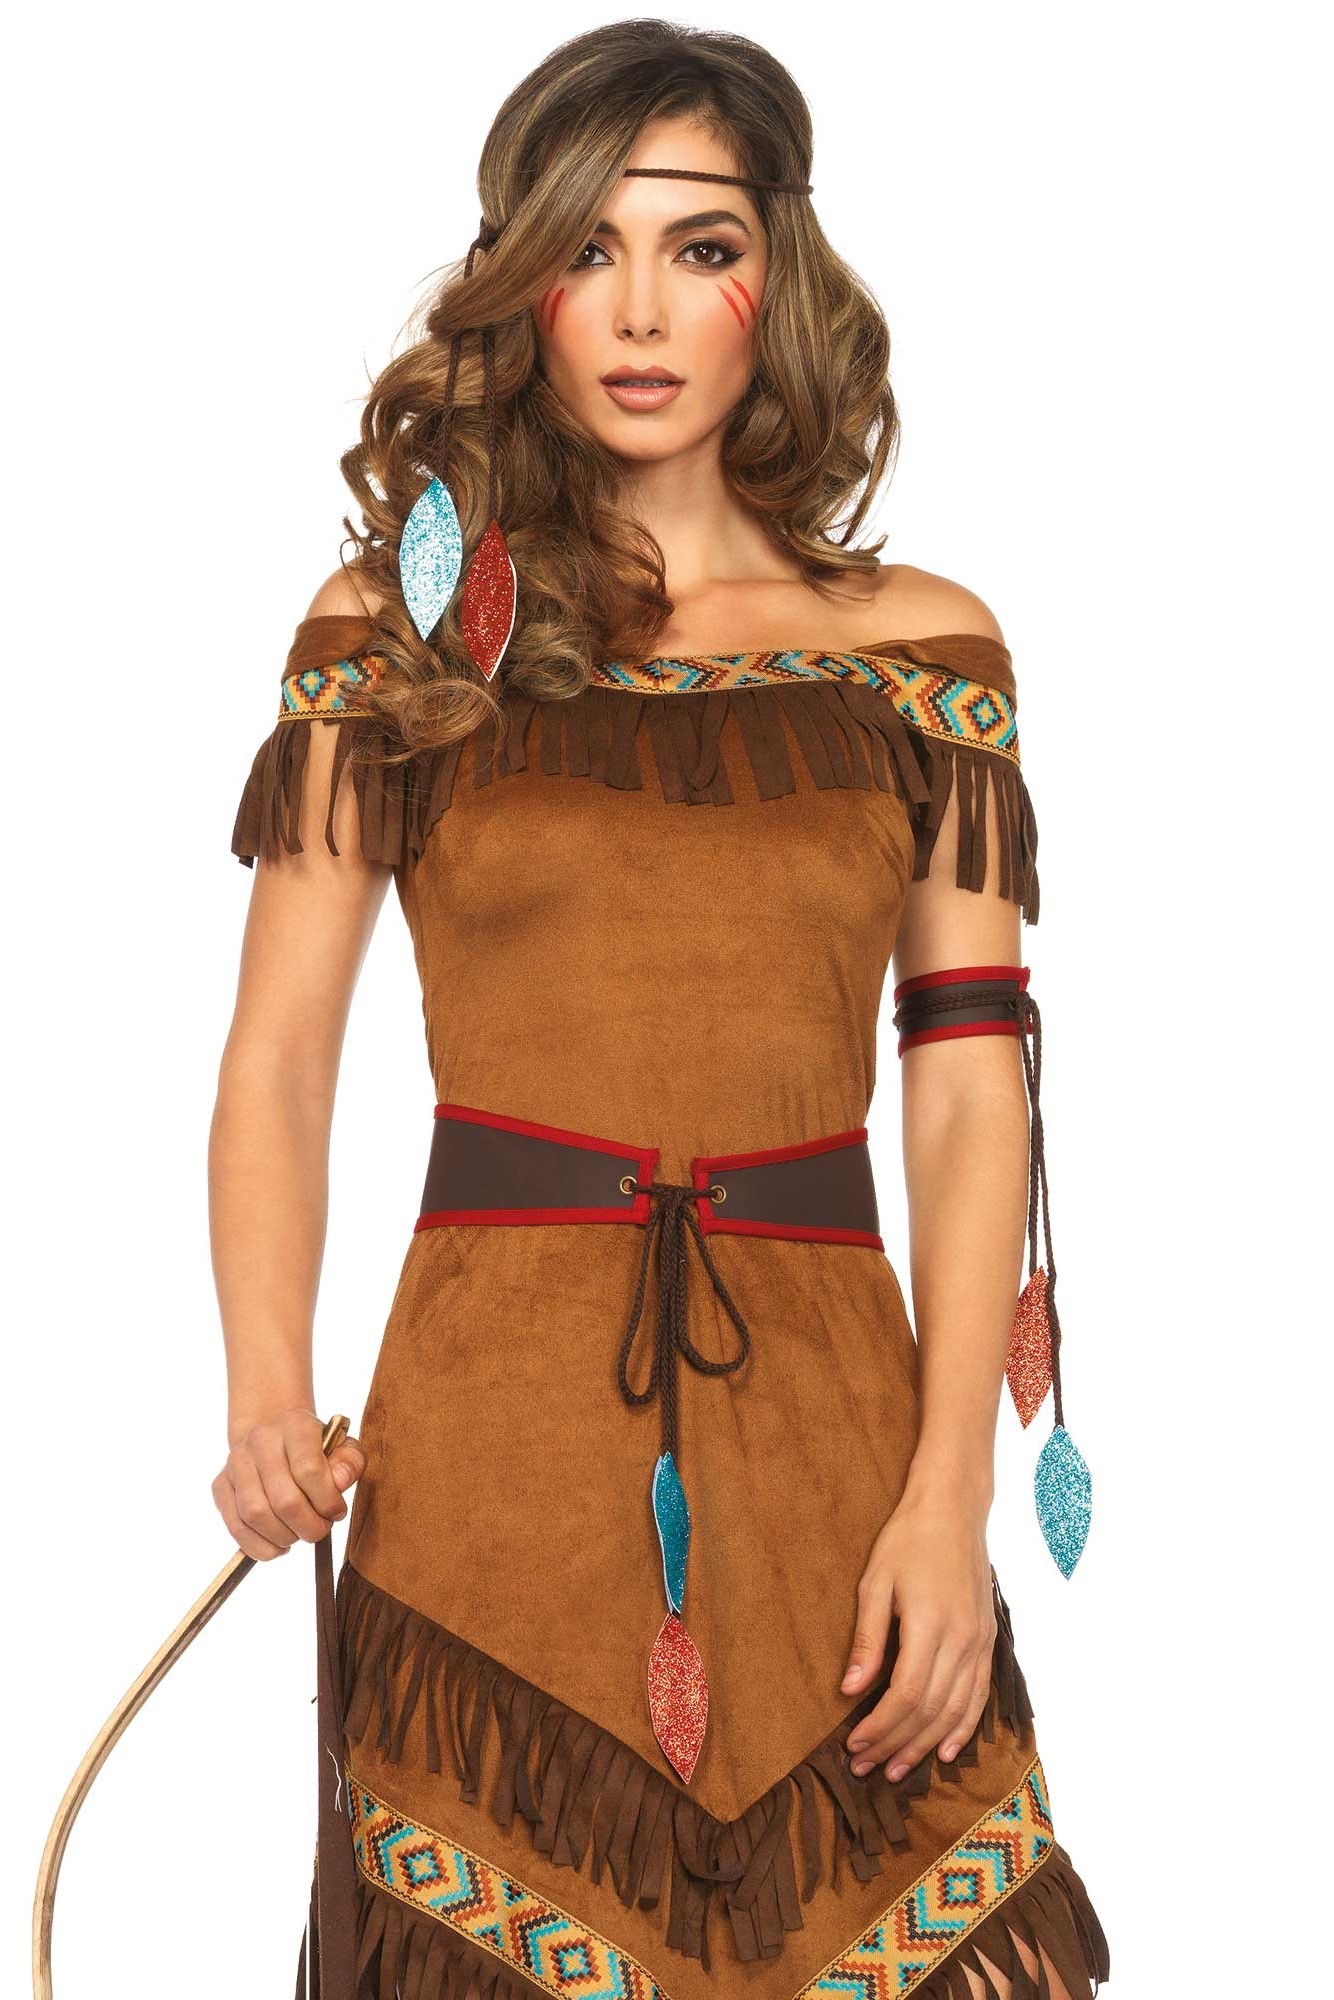 Costume Pocahontas